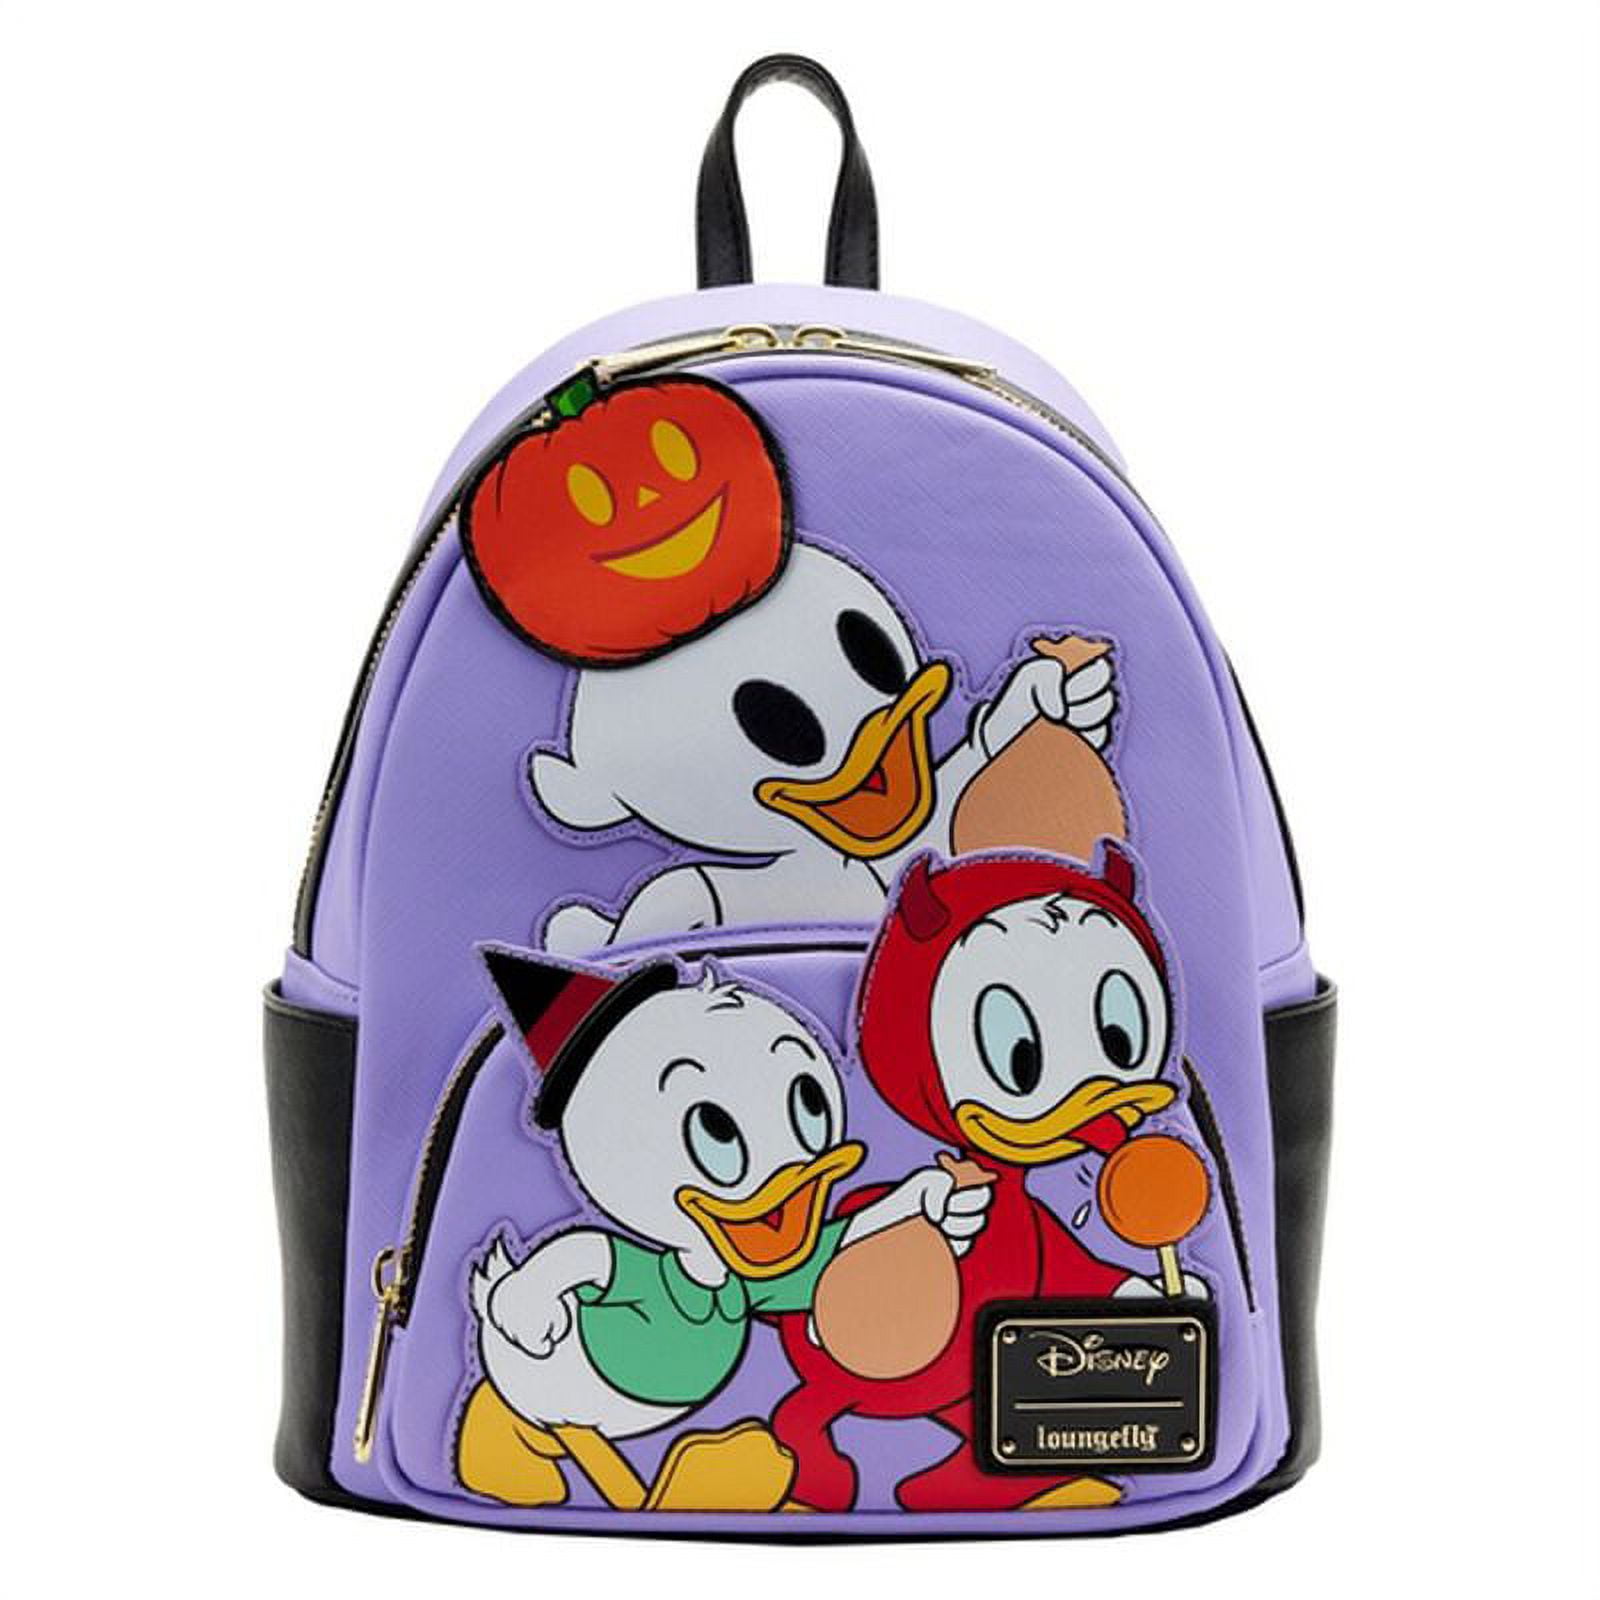 Loungefly Disney Huey, Dewey, and Louie Trick or Treat Mini Backpack